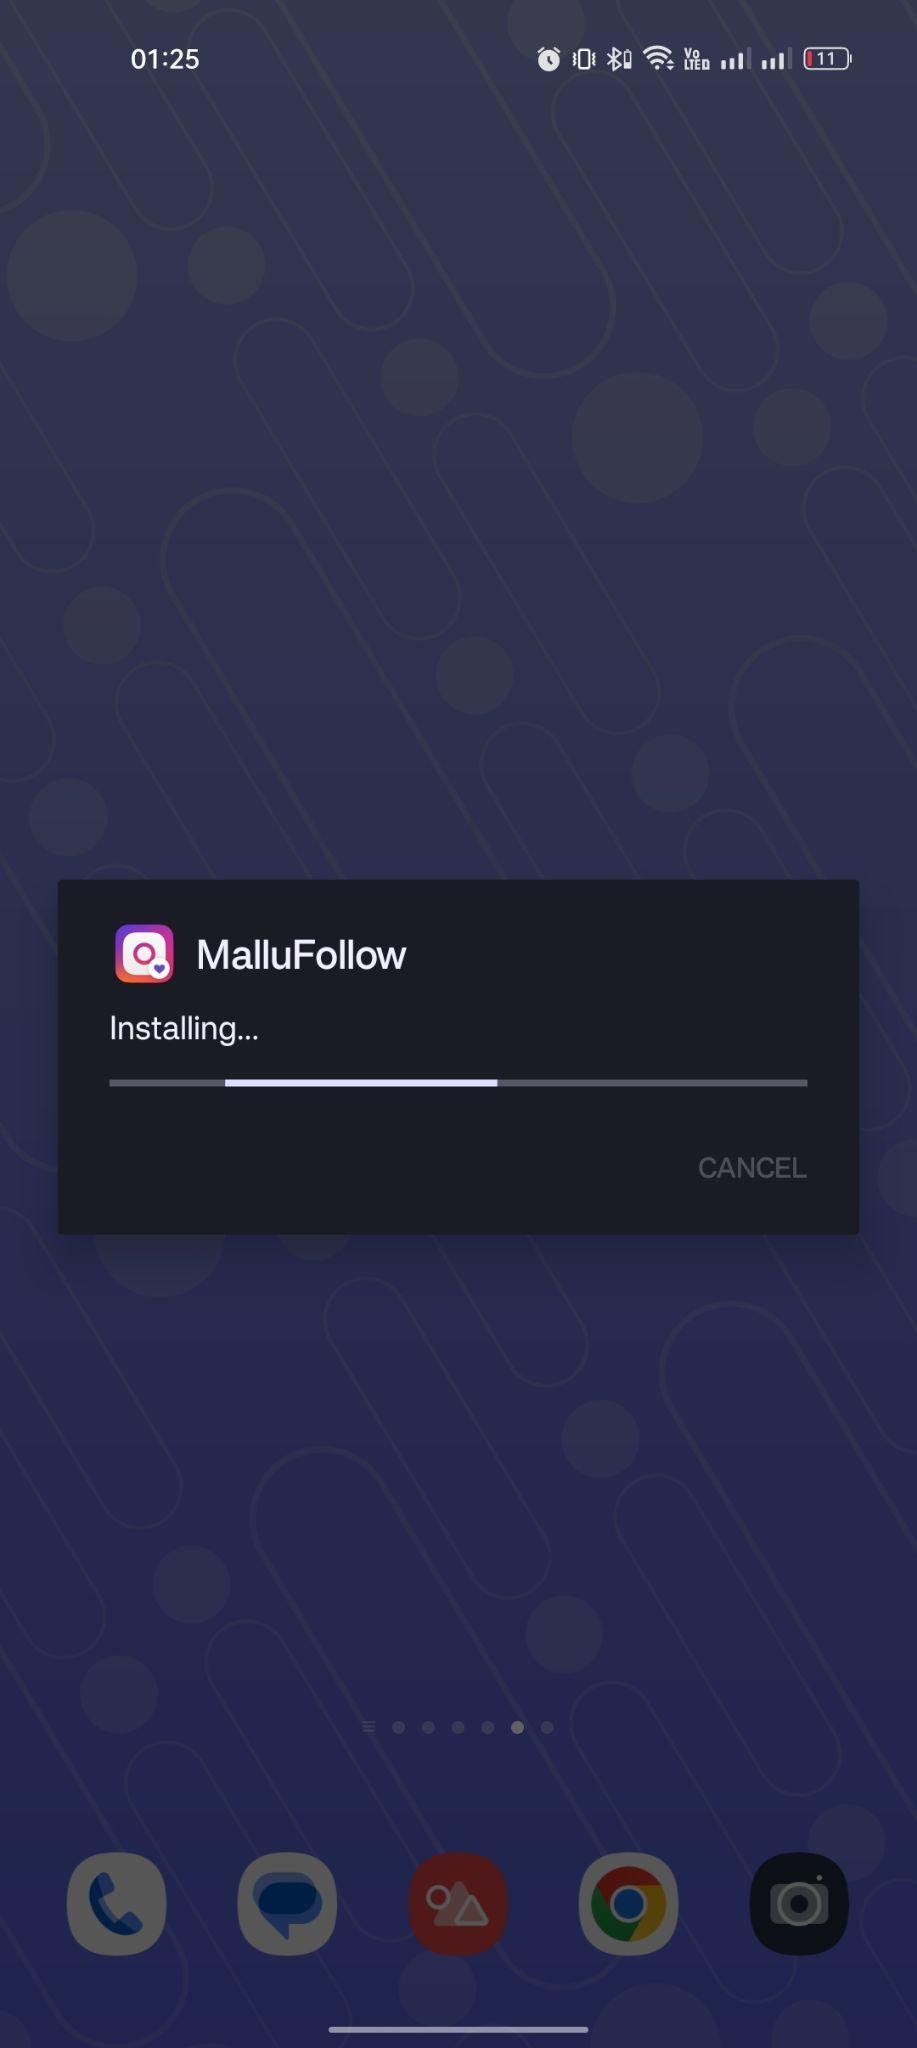 MalluFollow apk installing